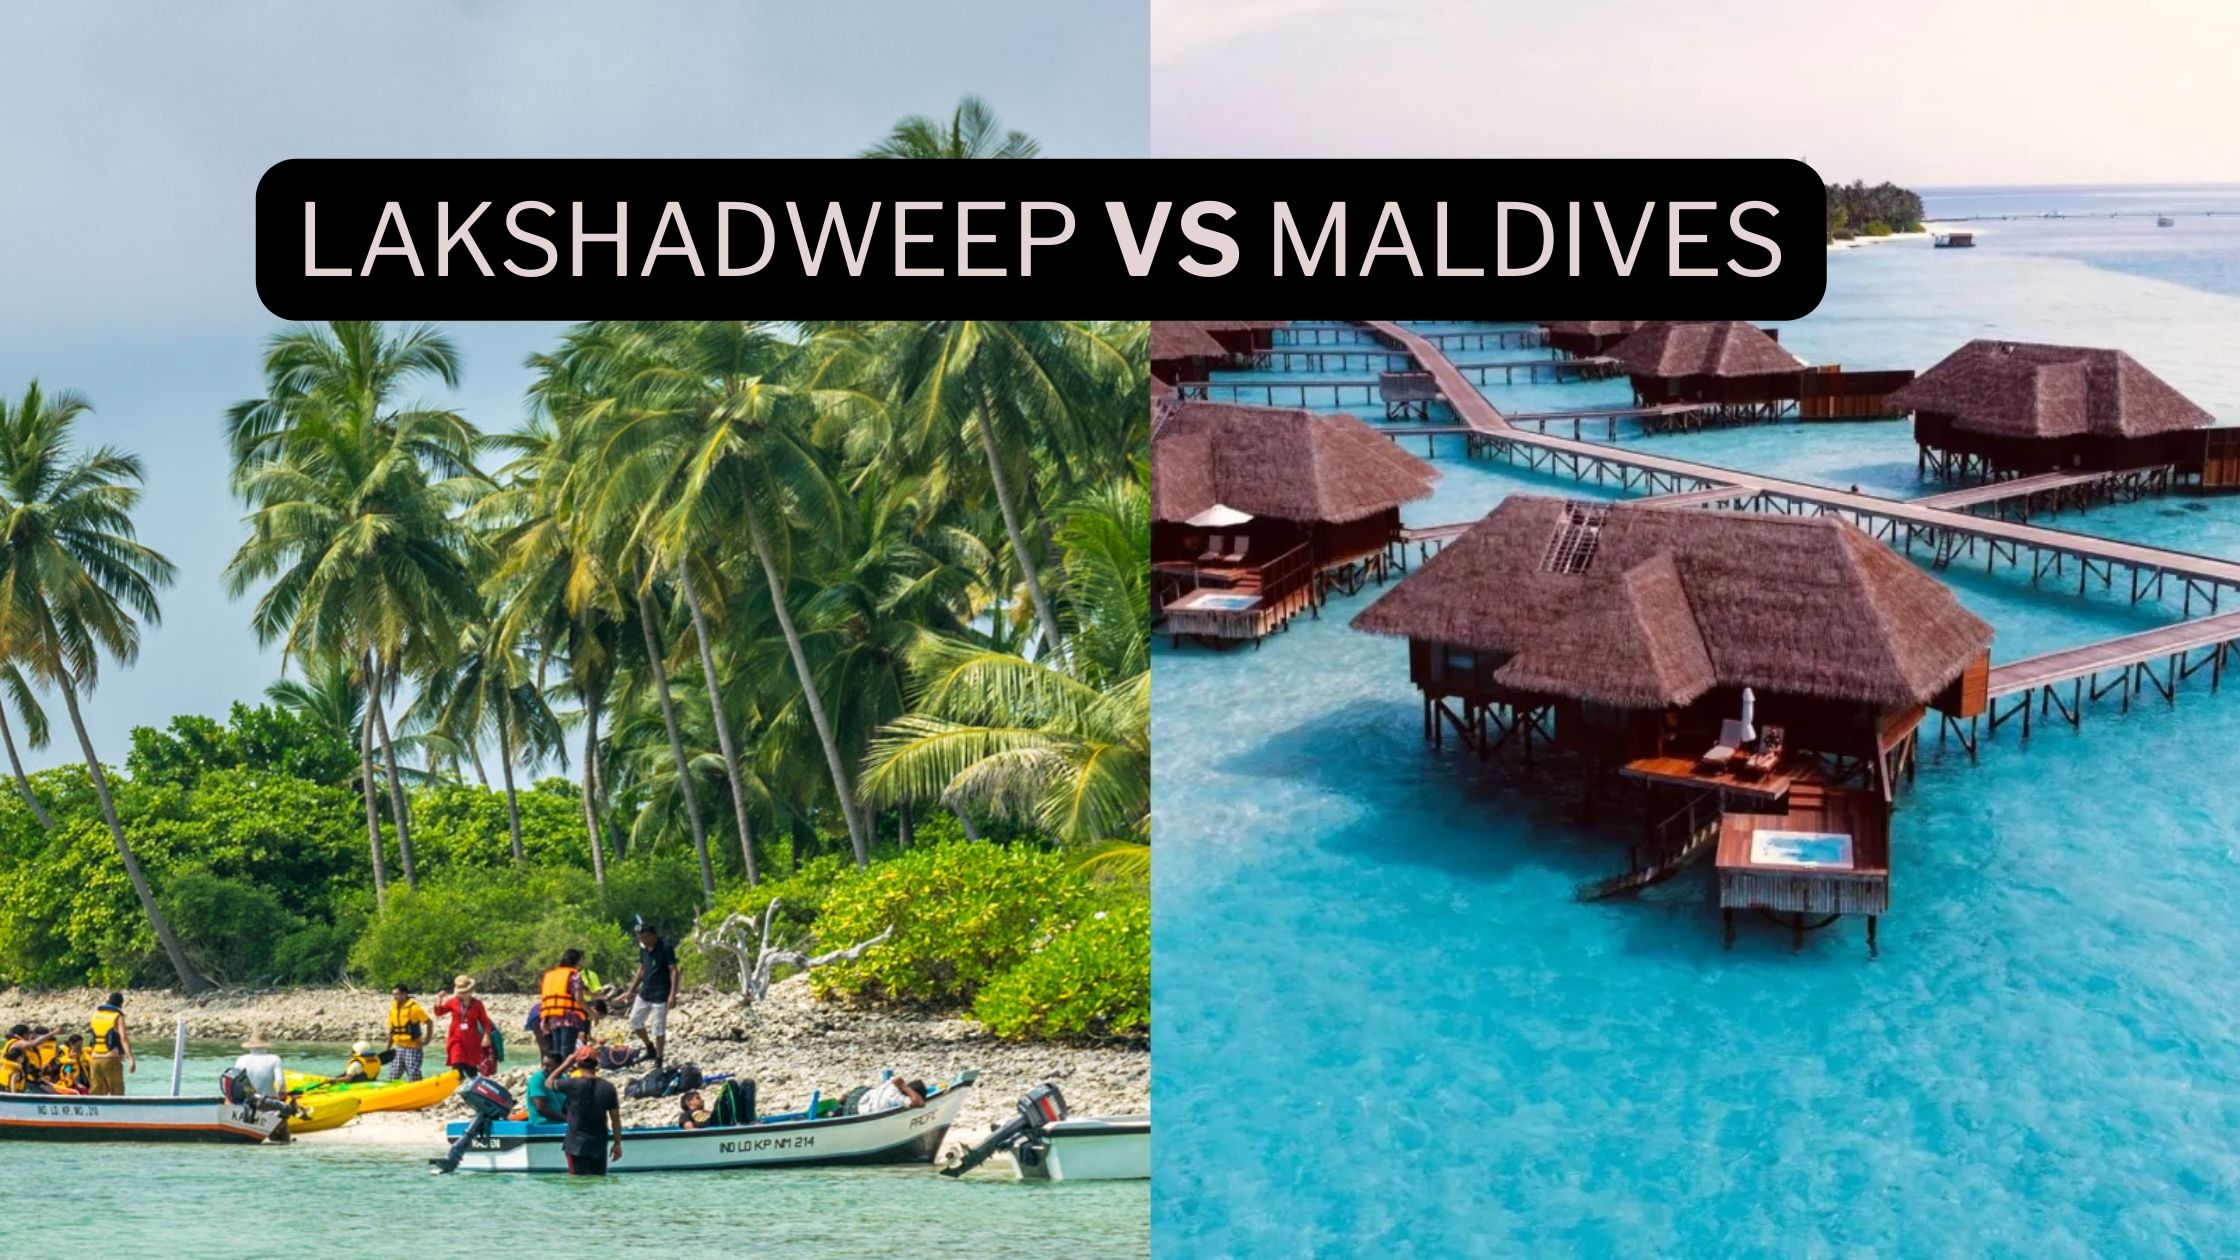 Why Indians should visit Lakshadweep over Maldives